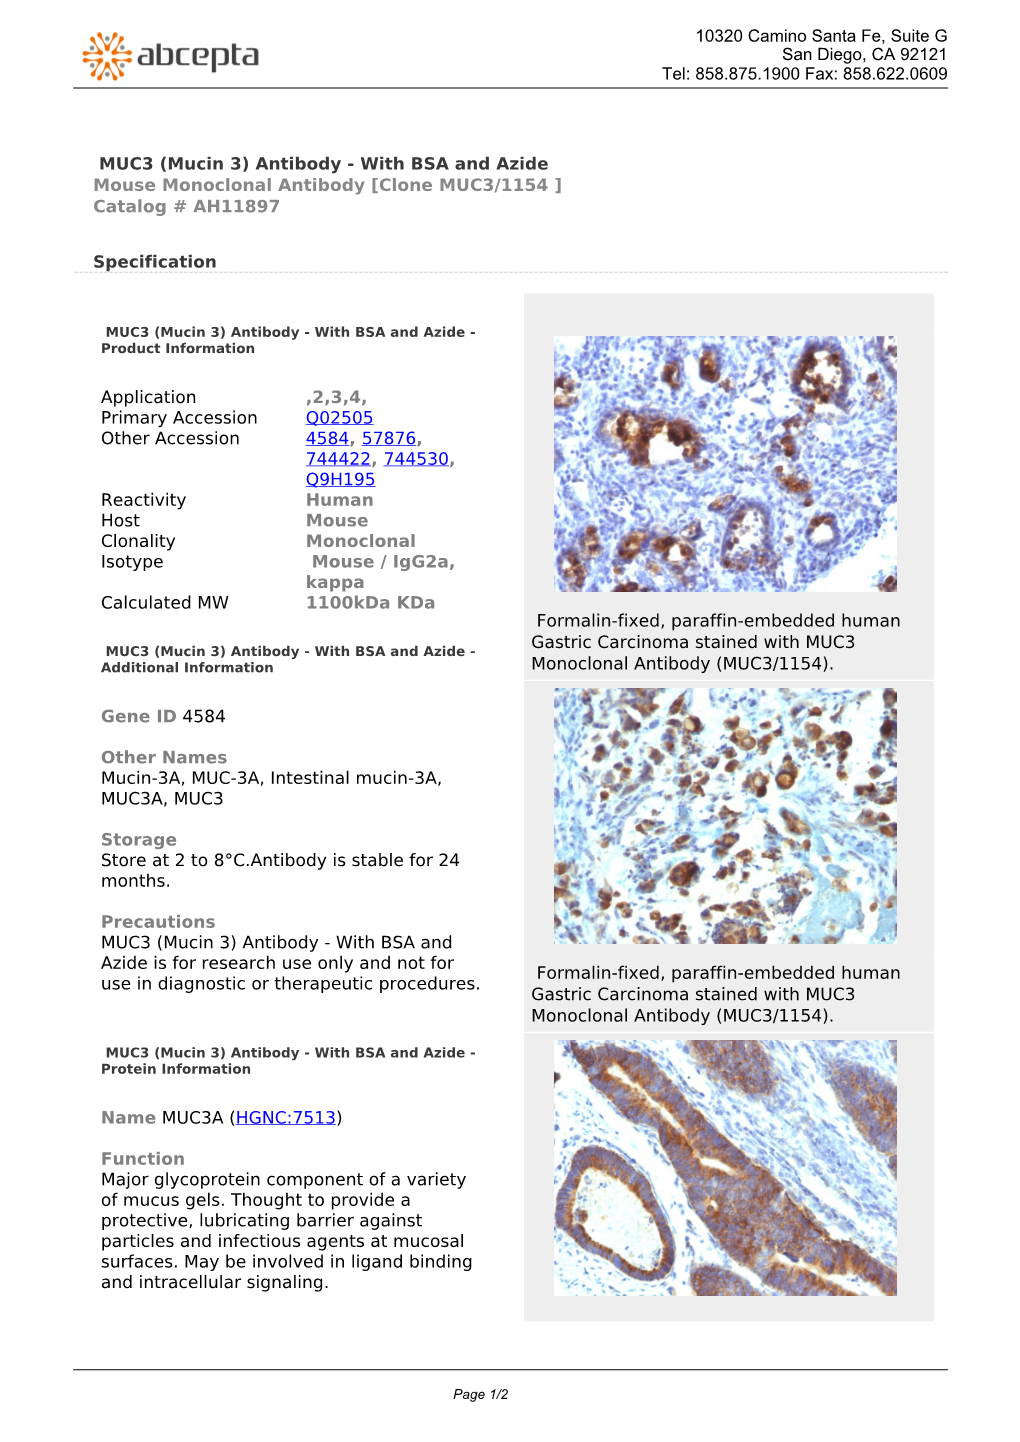 MUC3 (Mucin 3) Antibody - with BSA and Azide Mouse Monoclonal Antibody [Clone MUC3/1154 ] Catalog # AH11897